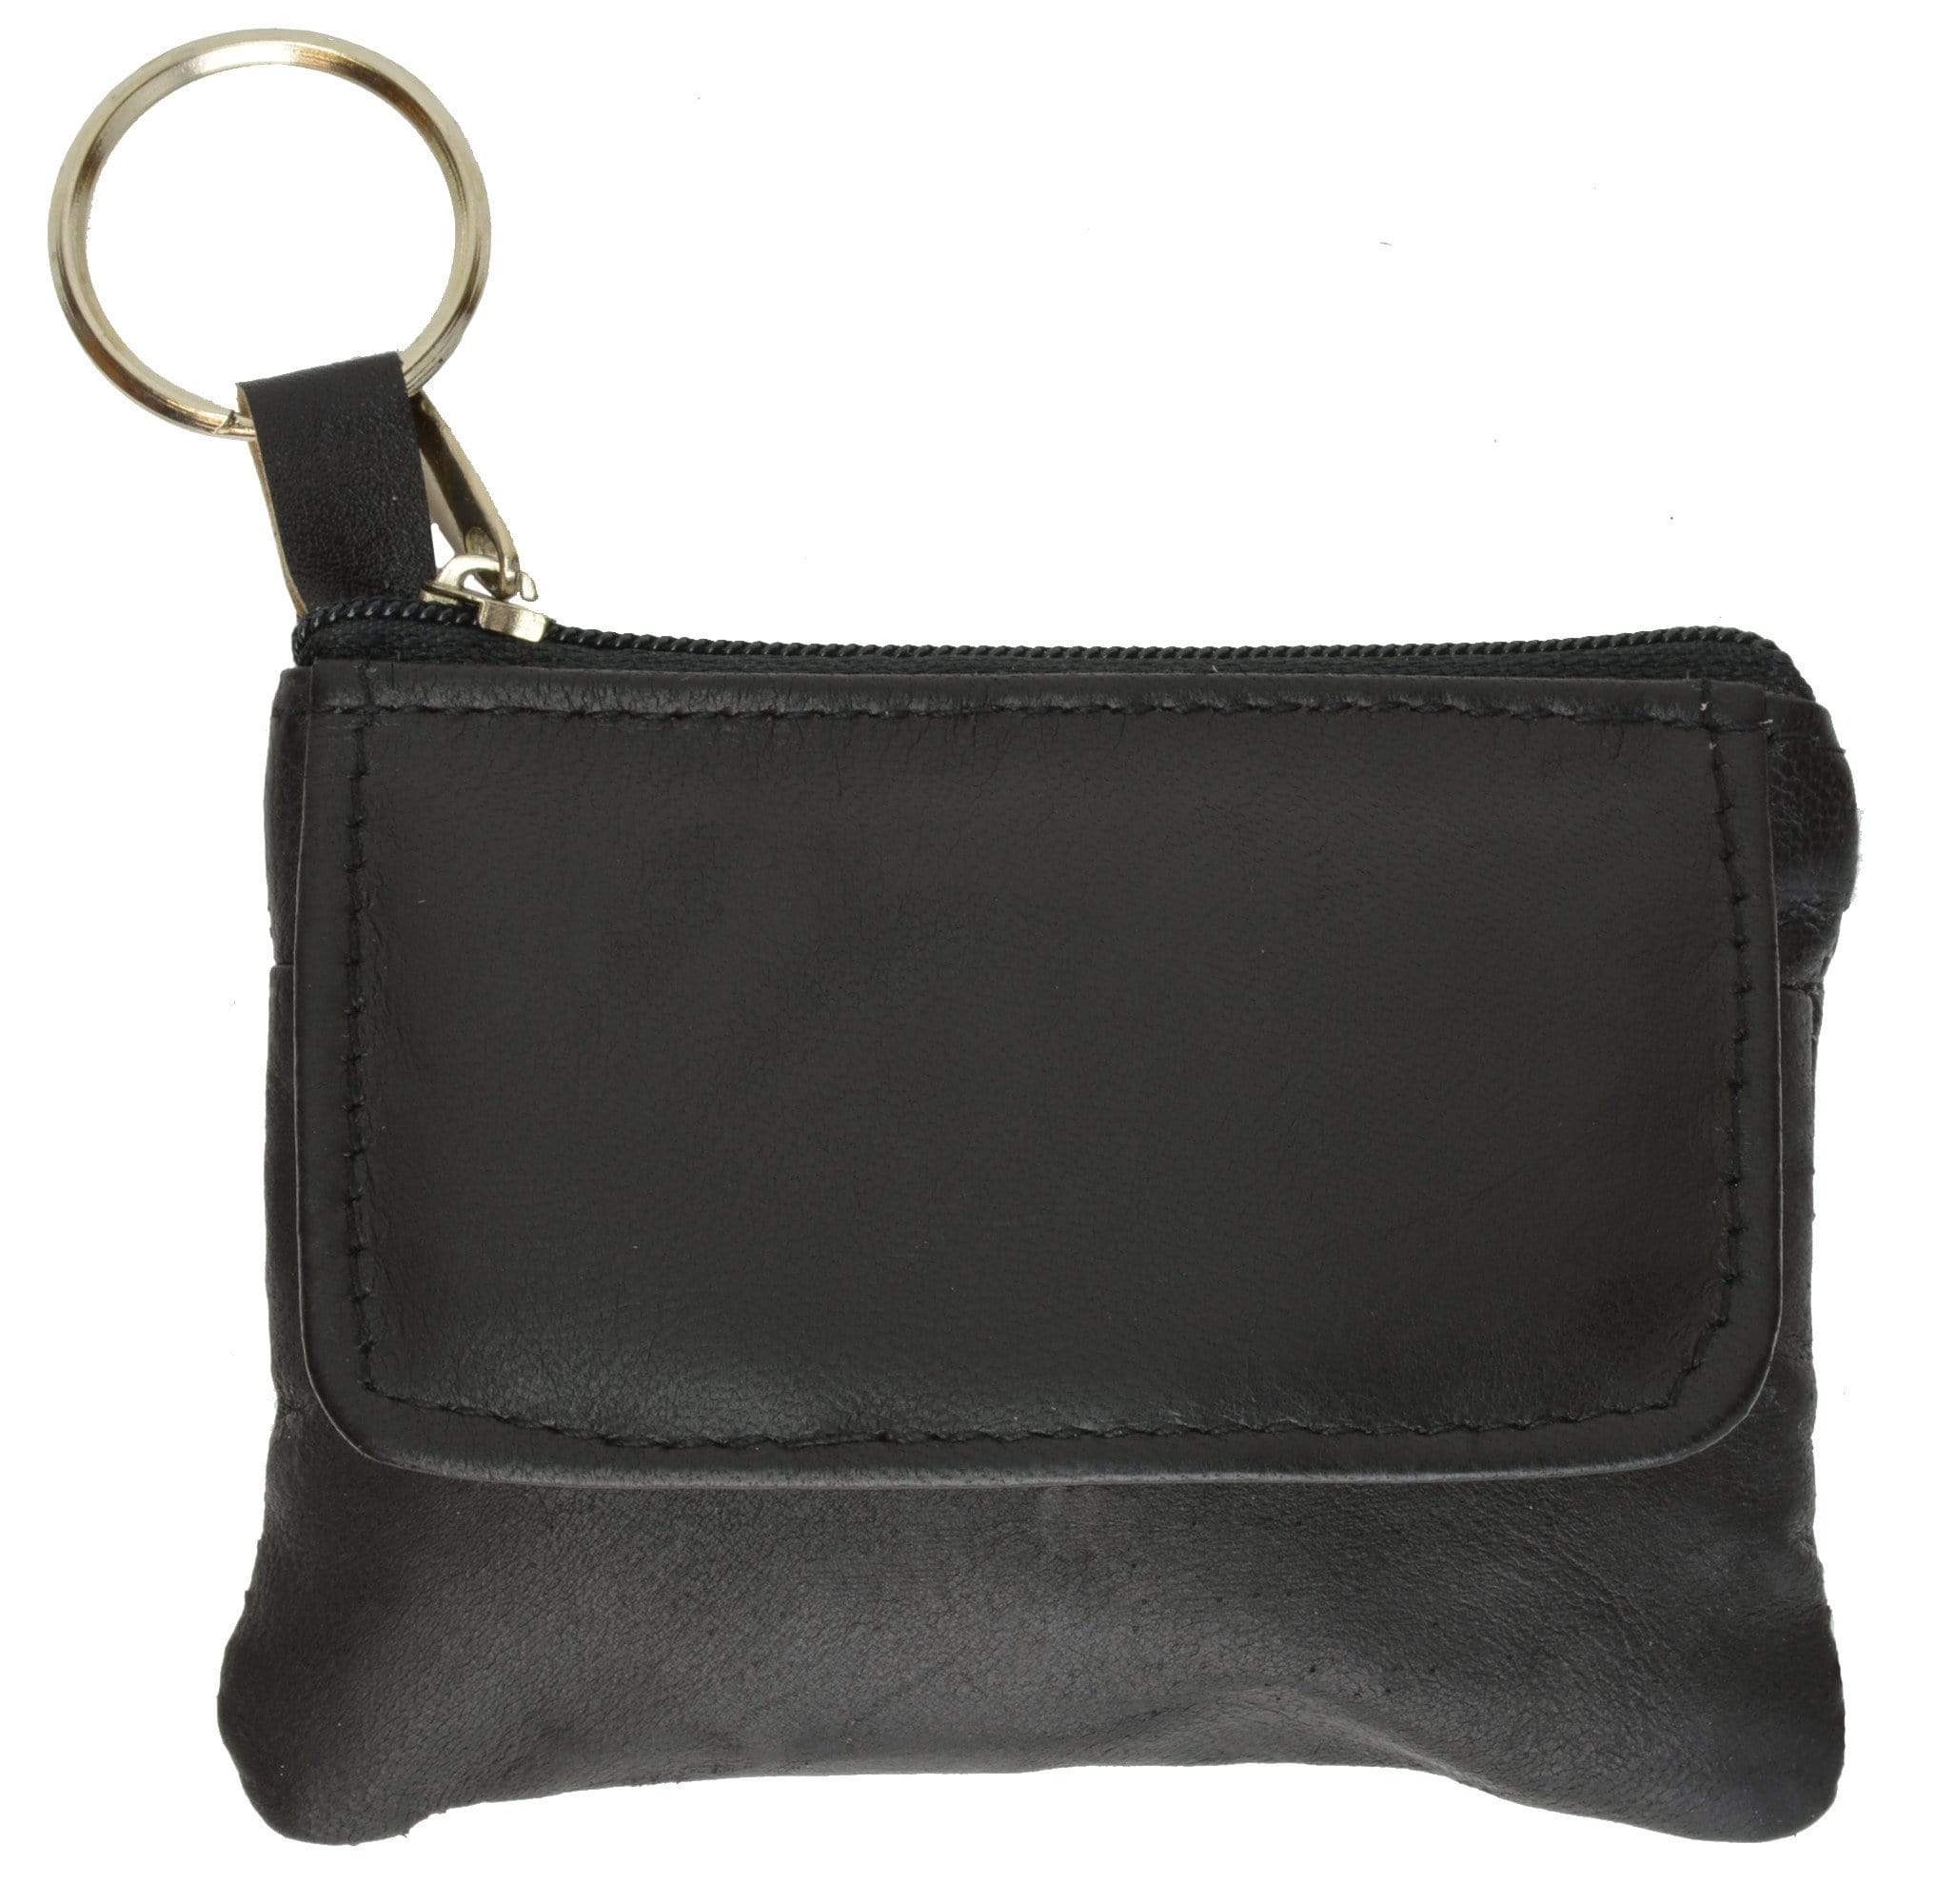 mens leather change purse